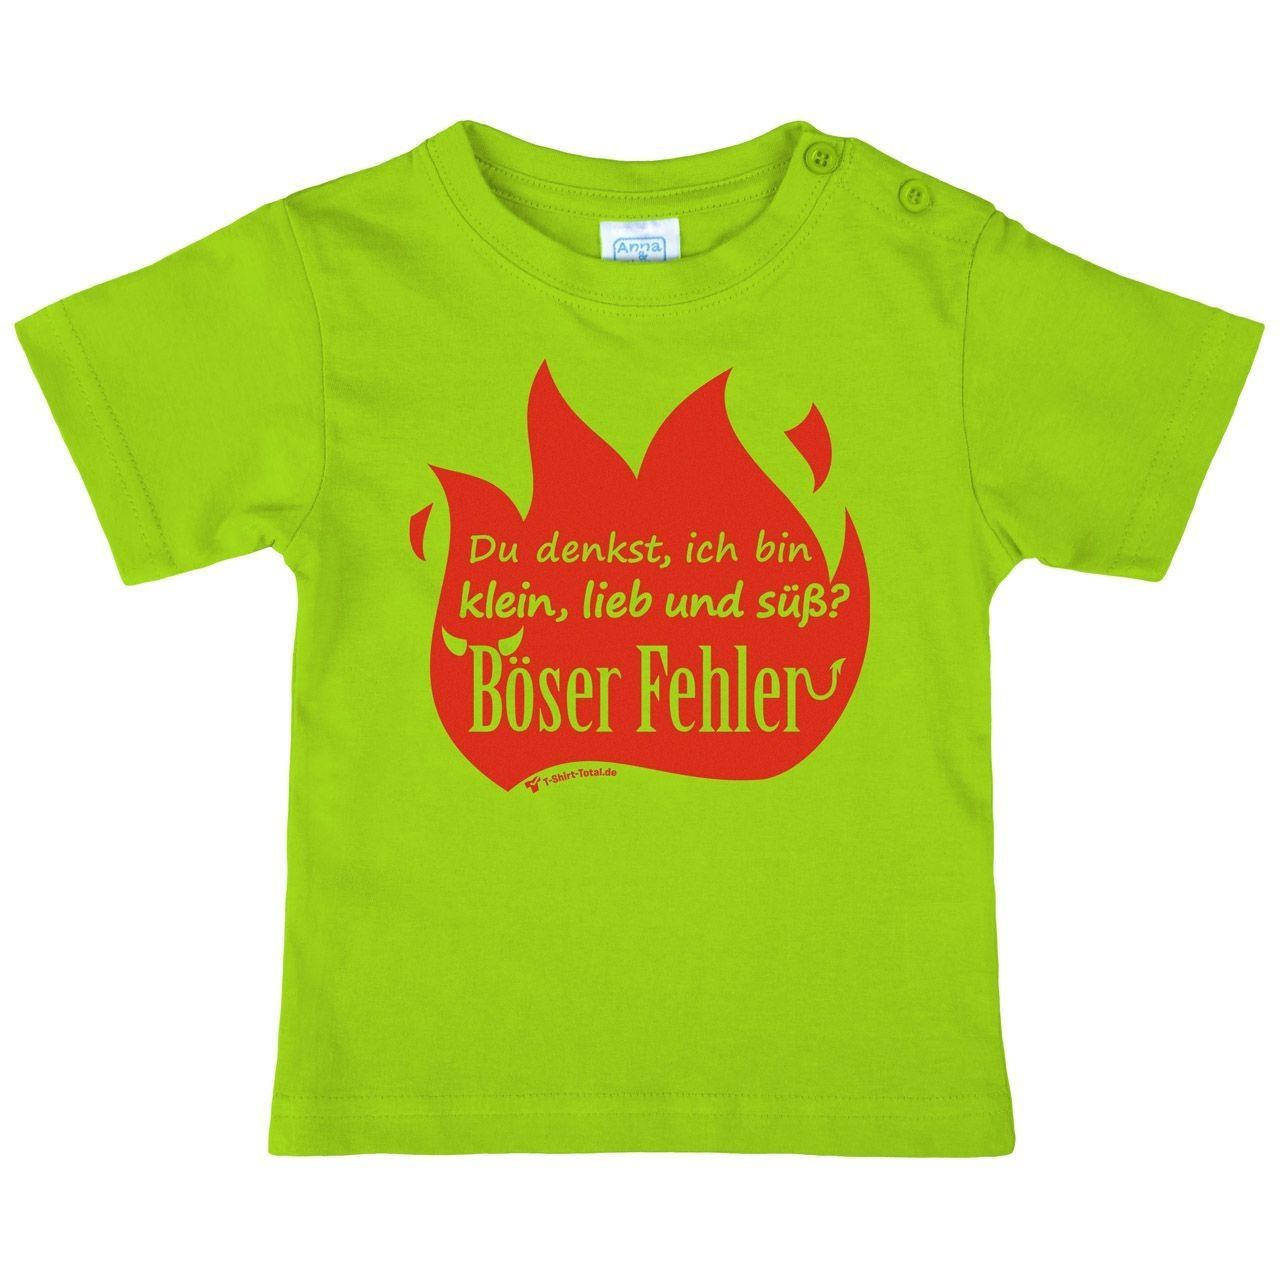 Böser Fehler Kinder T-Shirt hellgrün 80 / 86